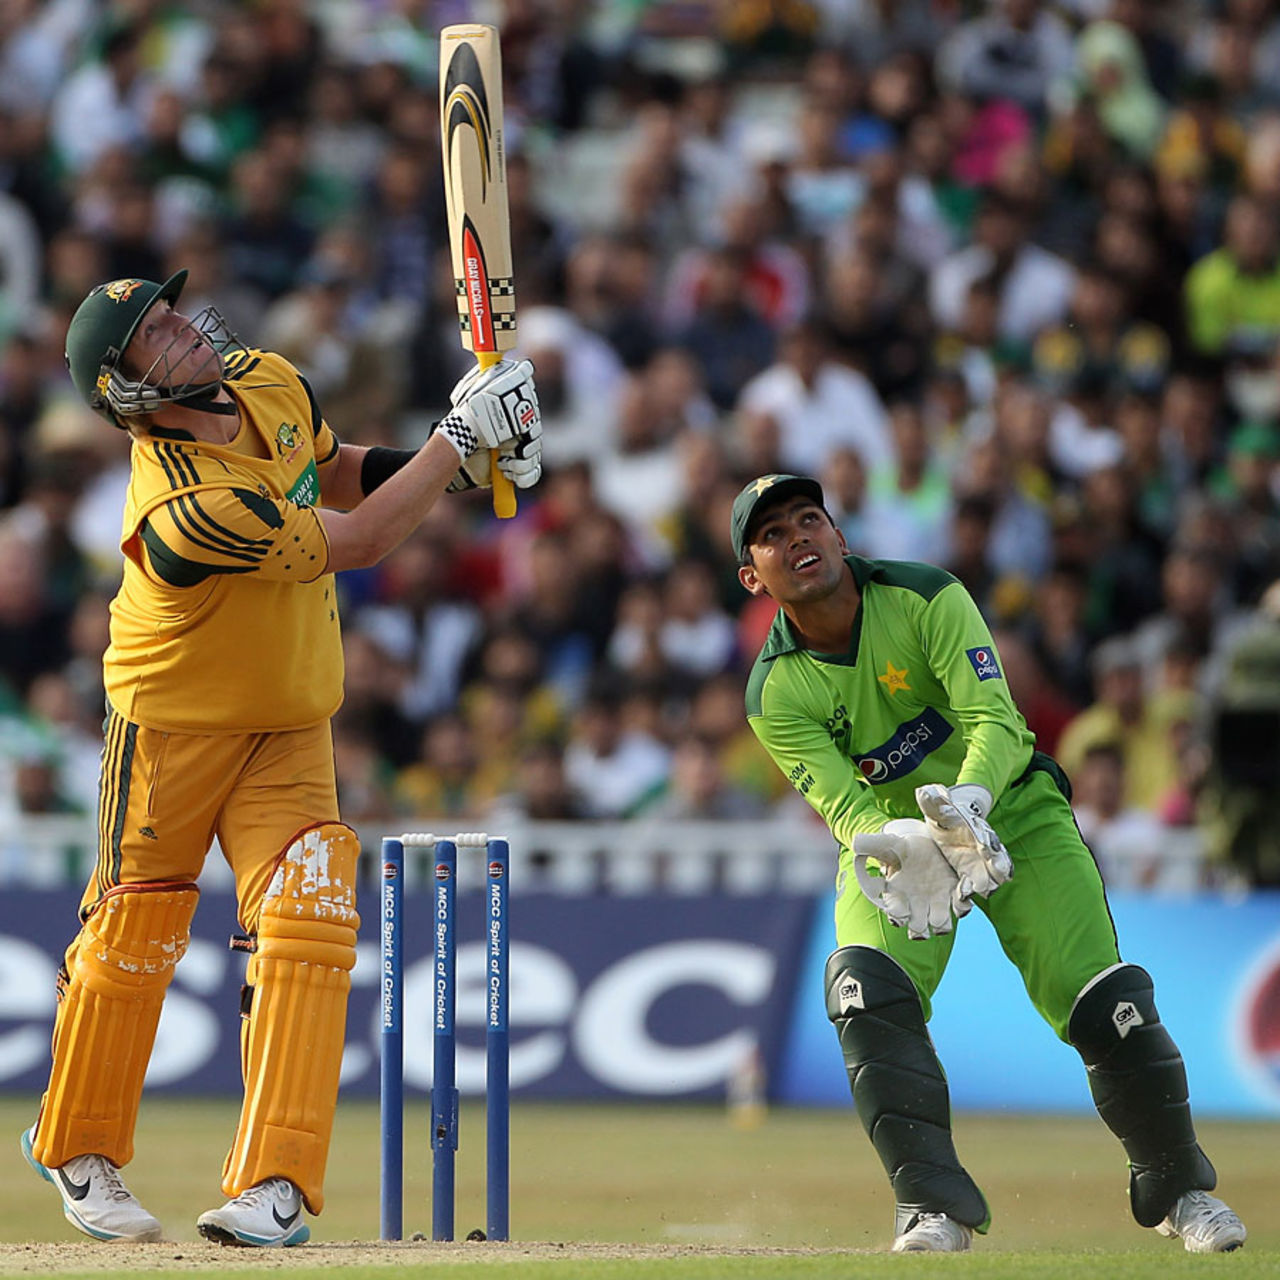 Shahid Afridi lured Cameron White into an ill-judicious leg-side shot to have him caught on the boundary, Pakistan v Australia, 2nd Twenty20, Edgbaston, July 6 2010